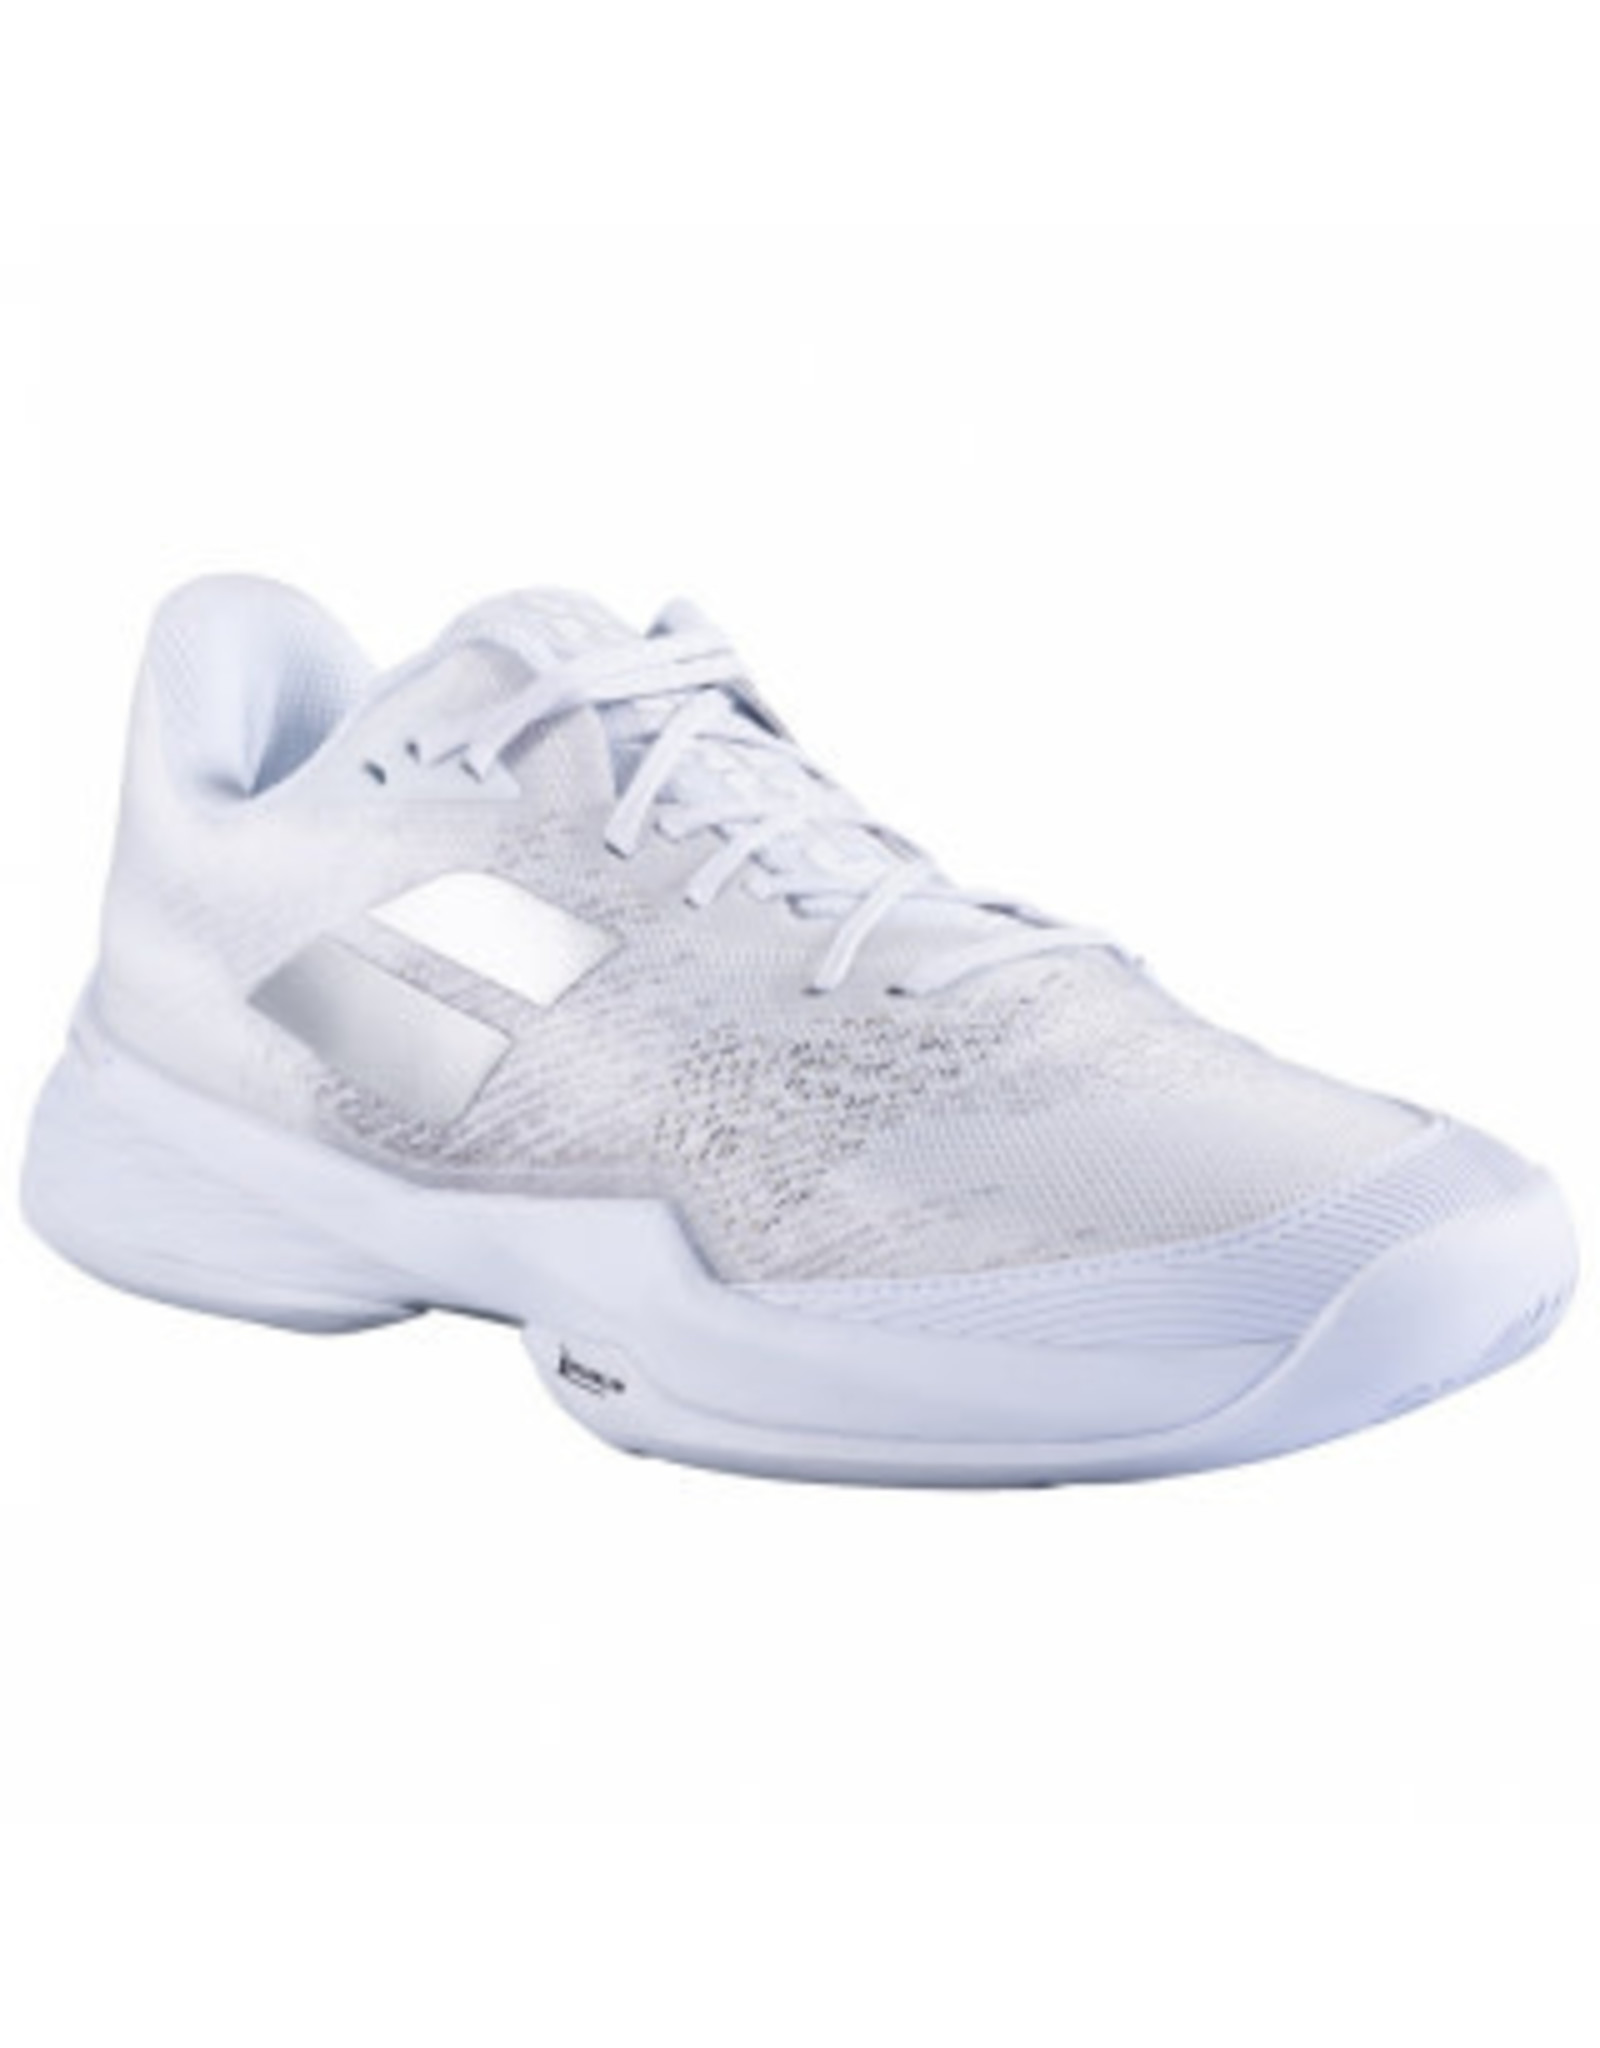 Babolat Babolat Jet Mach 3 AC Men's Tennis Shoes (White/Silver)